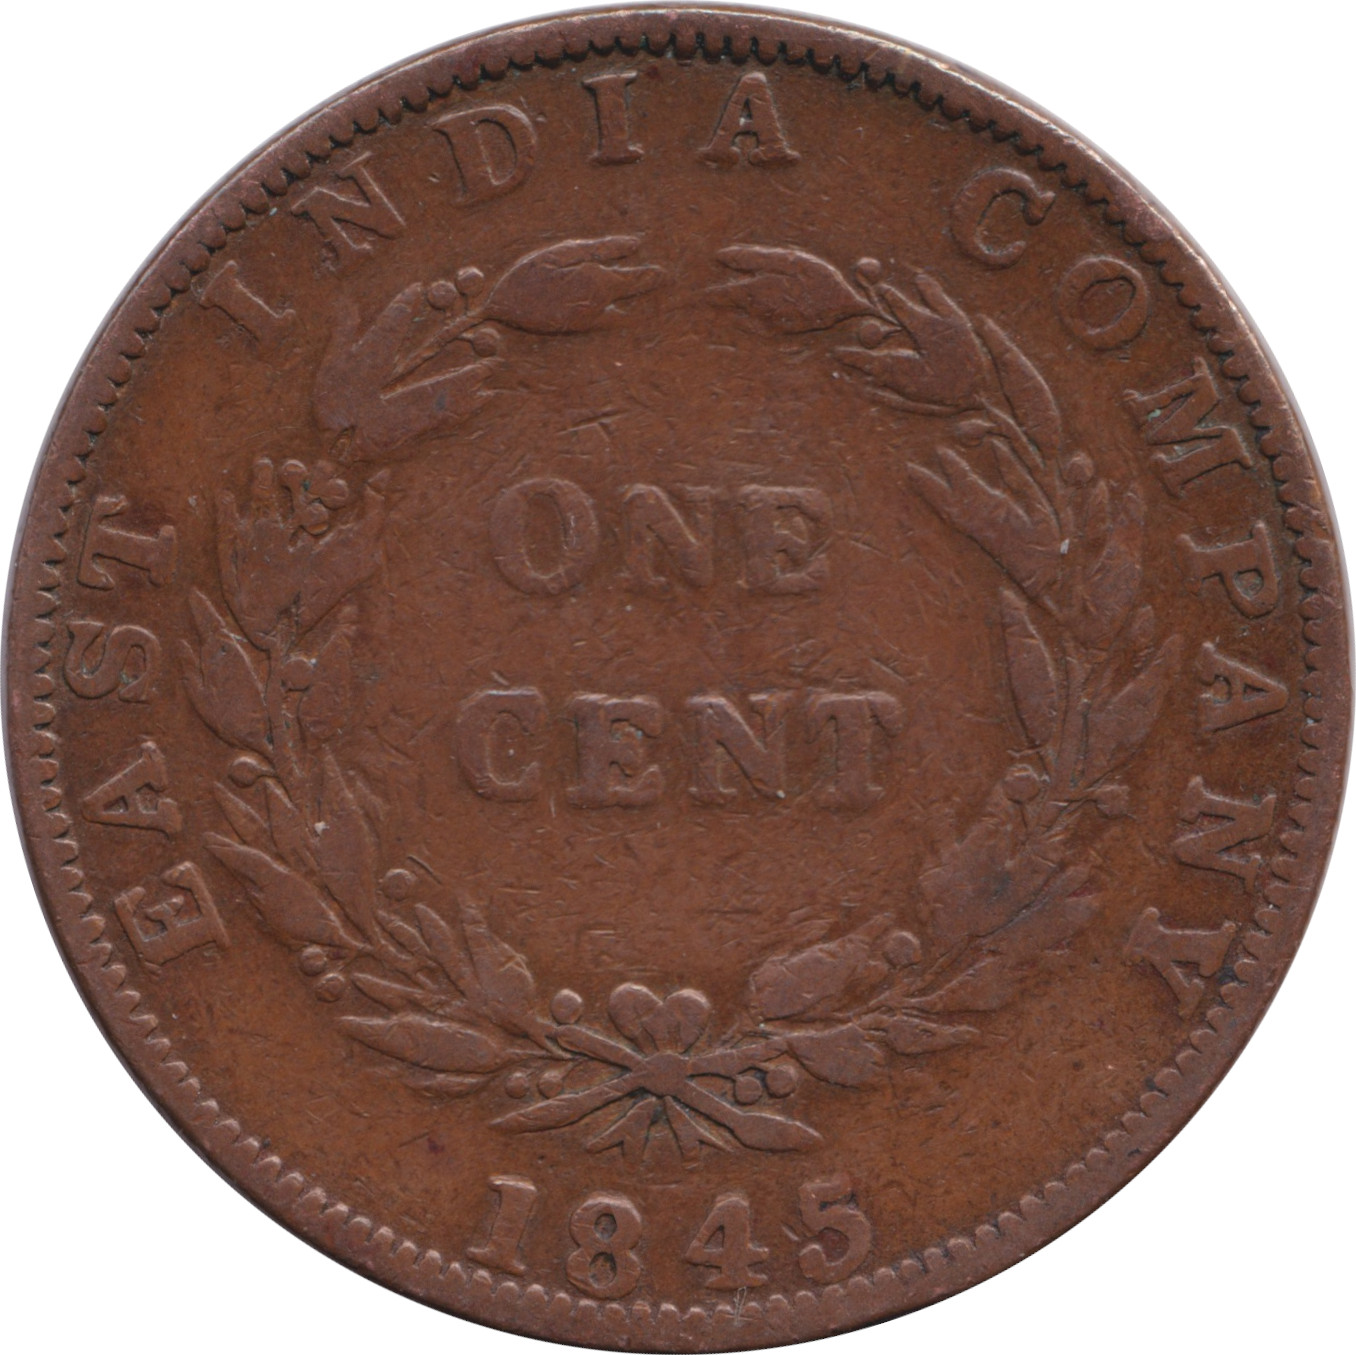 1 cent - East India Company